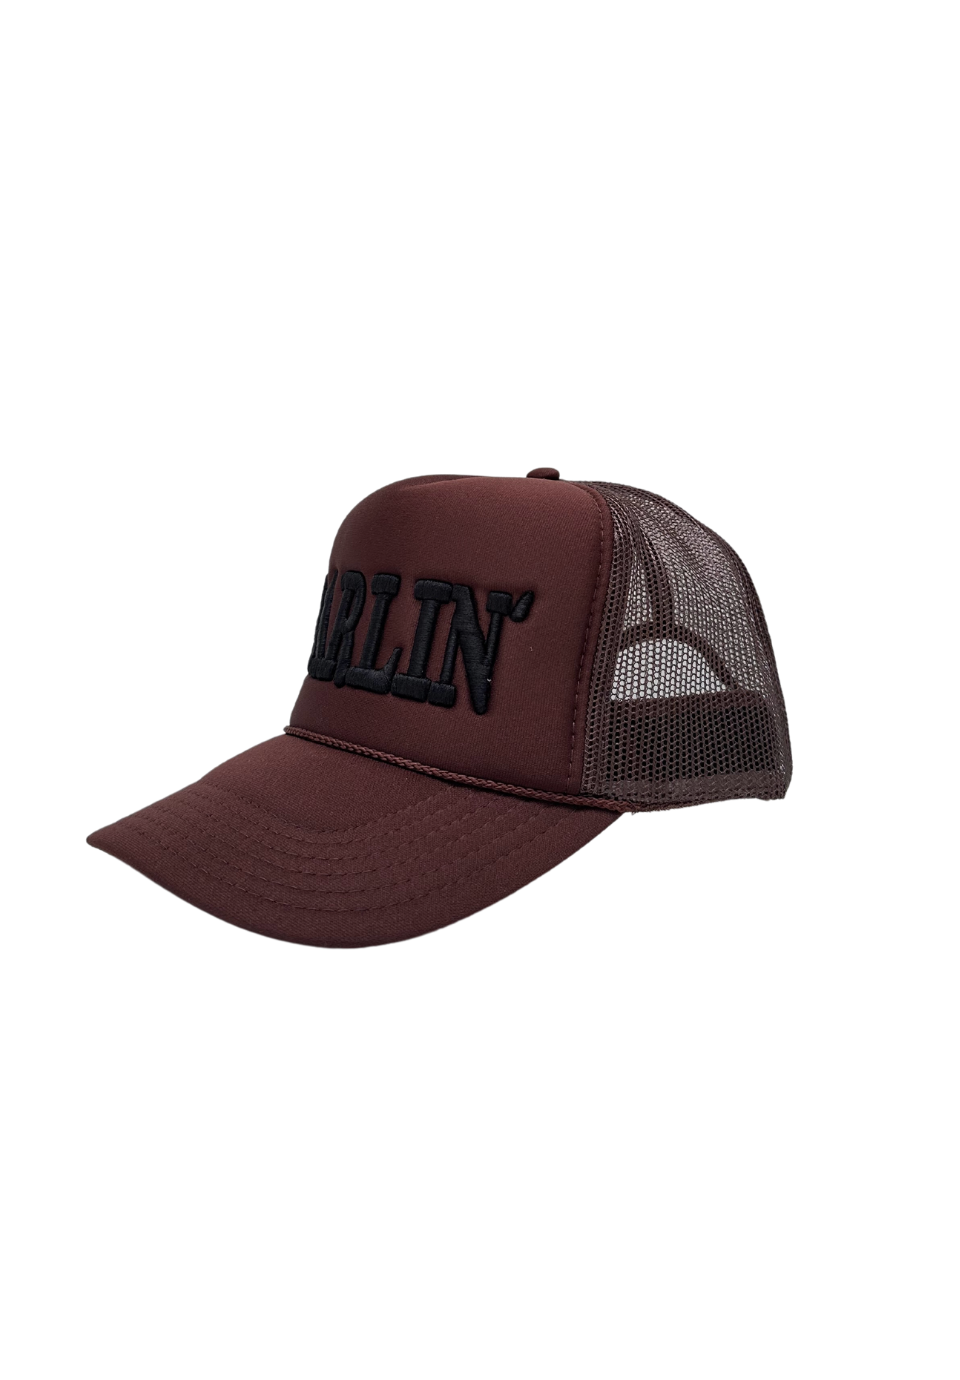 DARLIN'™ Brown Trucker Hat